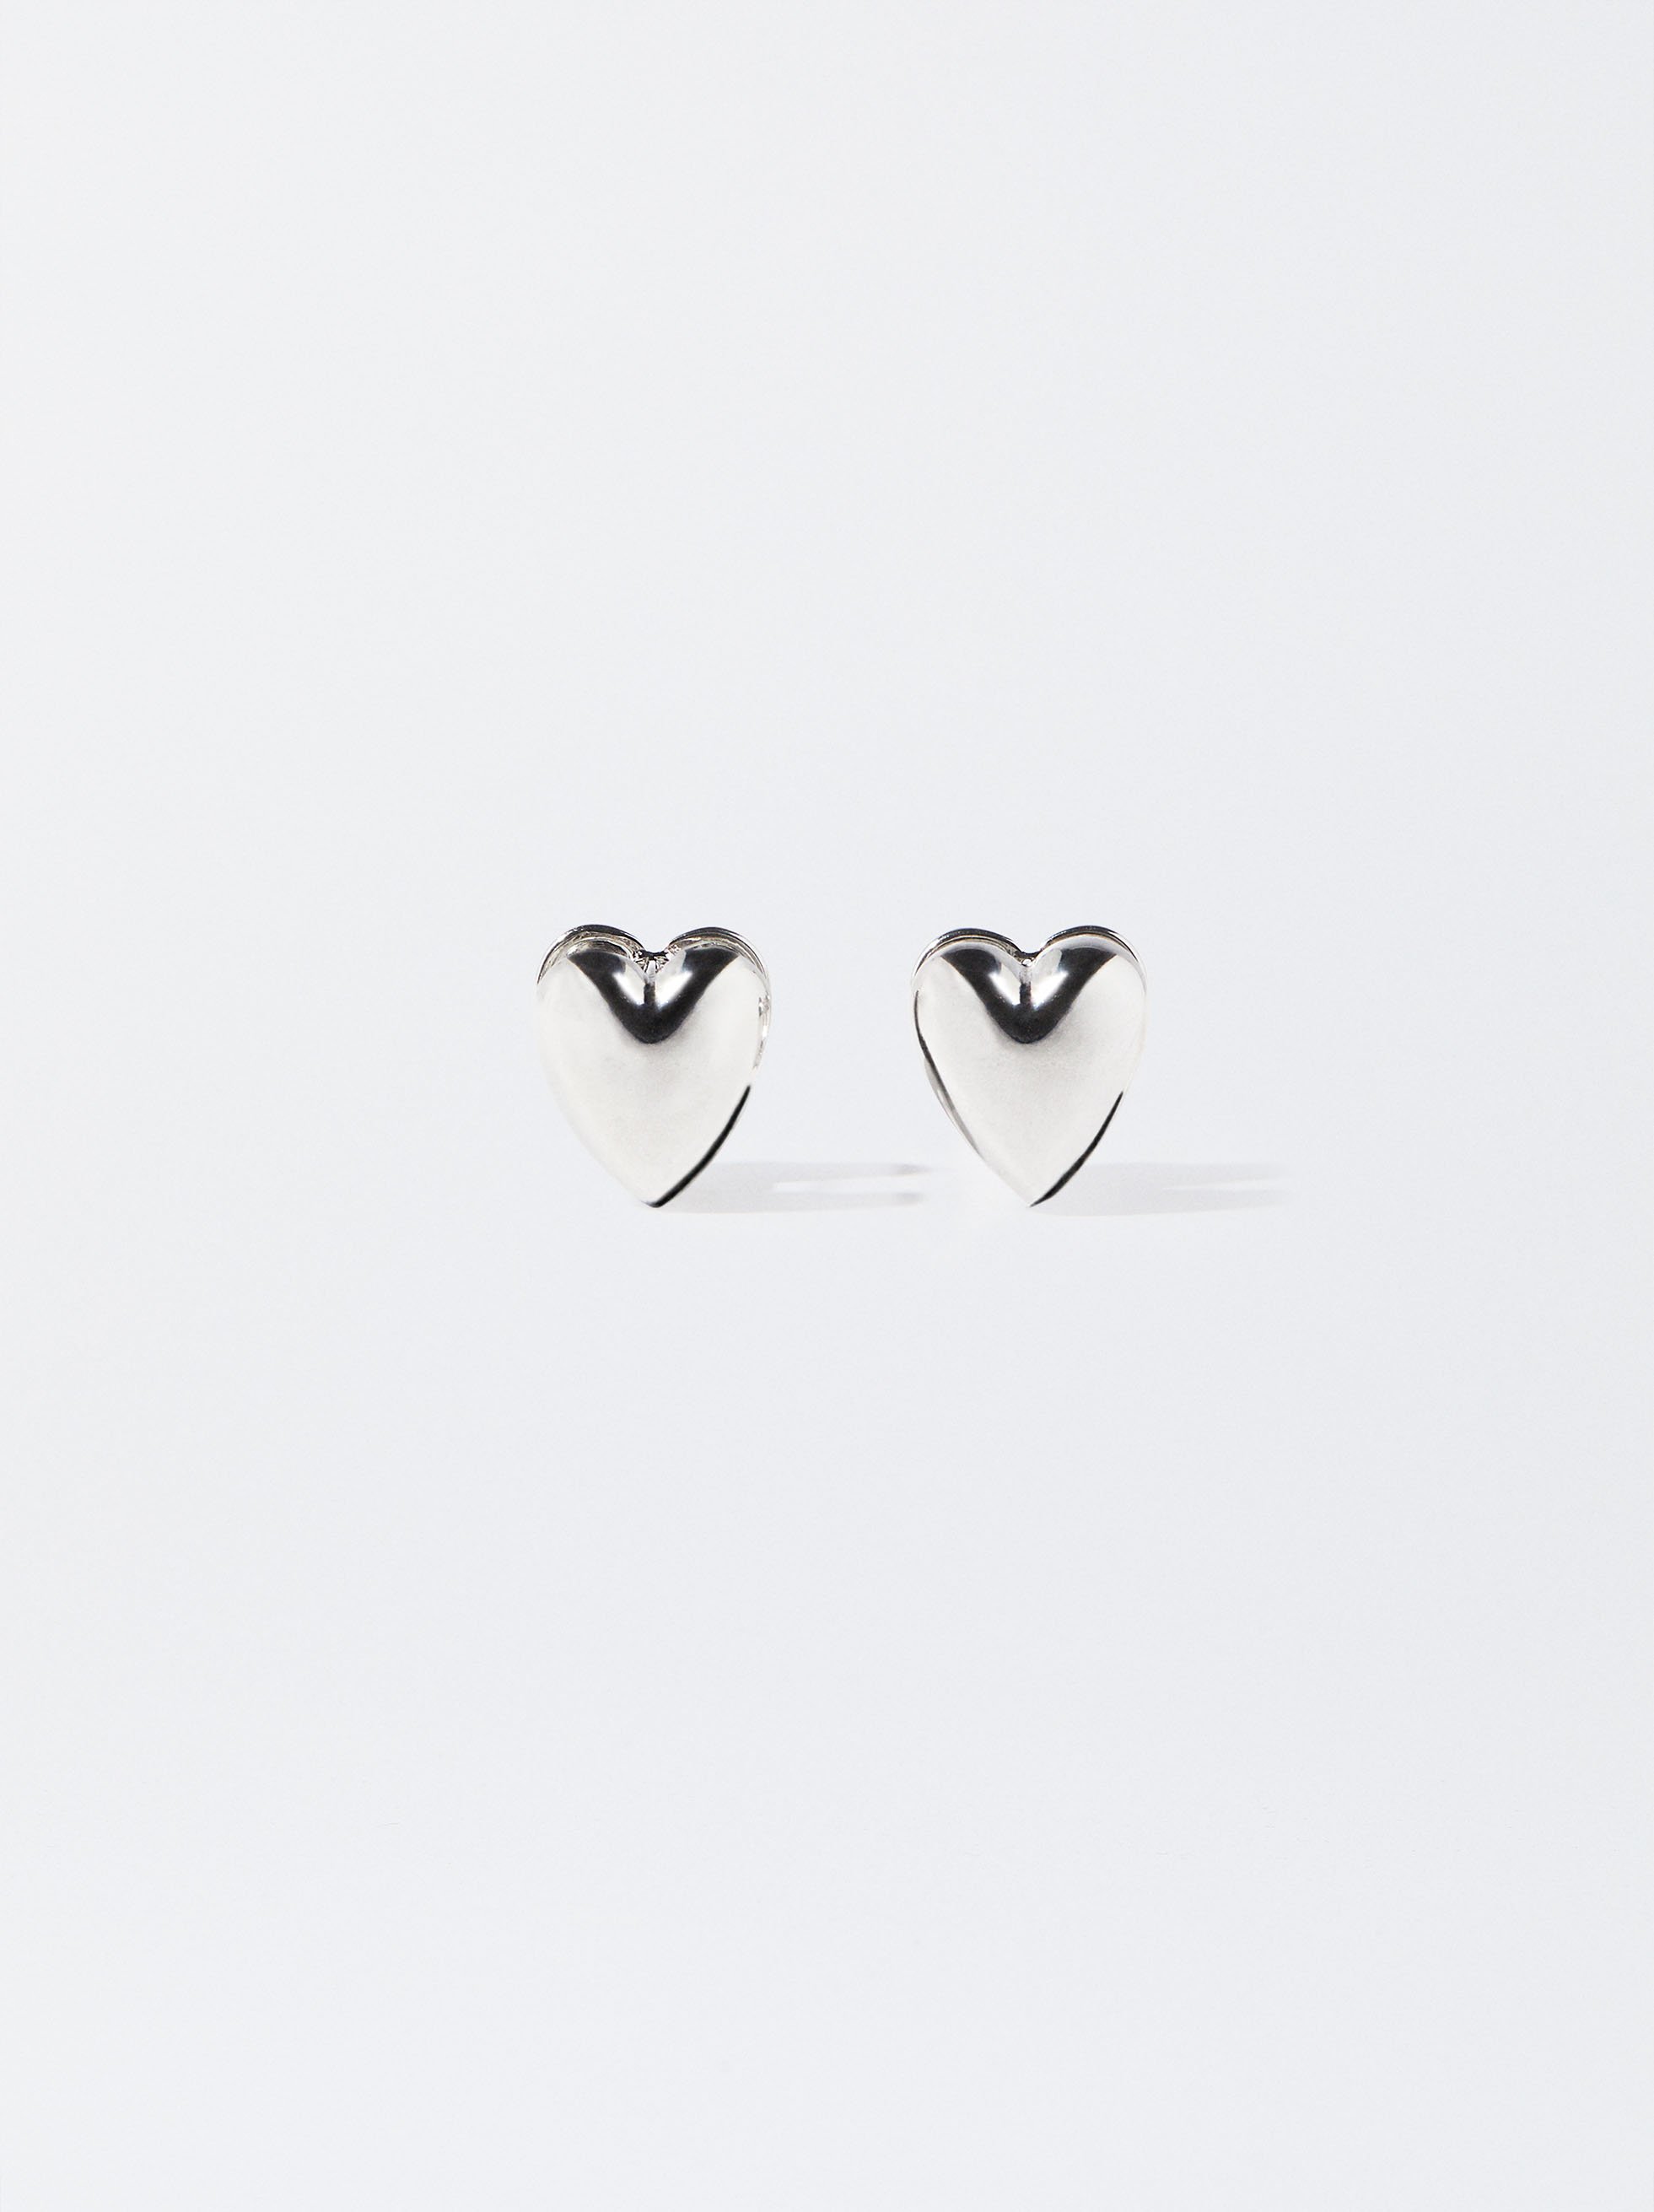 Small Heart Studs Niobium Post Earrings | Nonita Jewelry